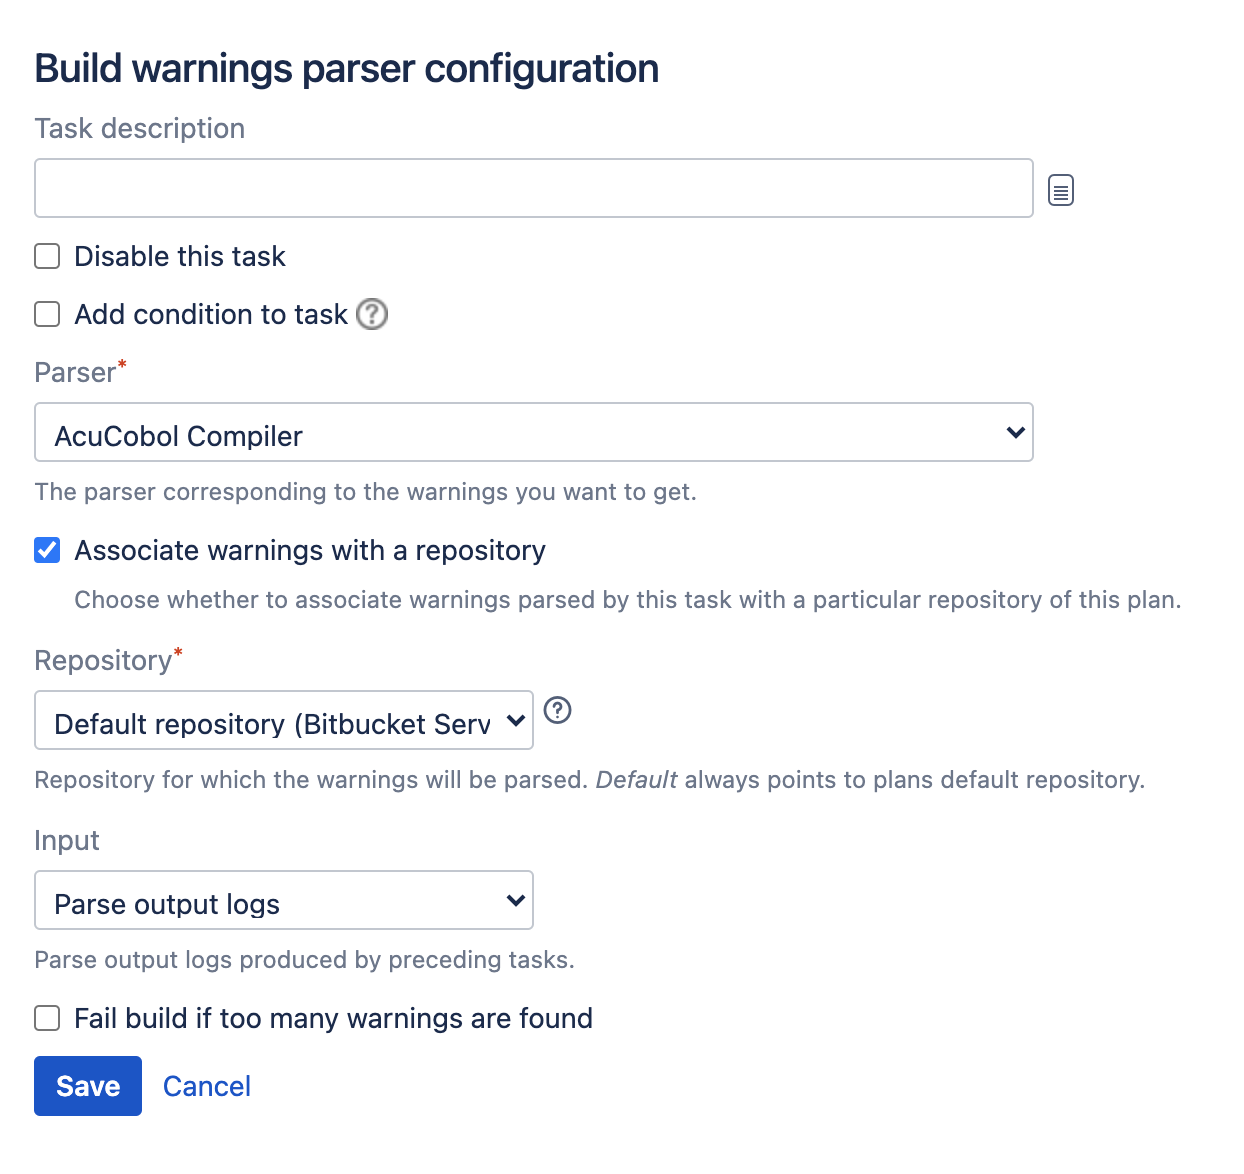 Build warnings parser task type configuration